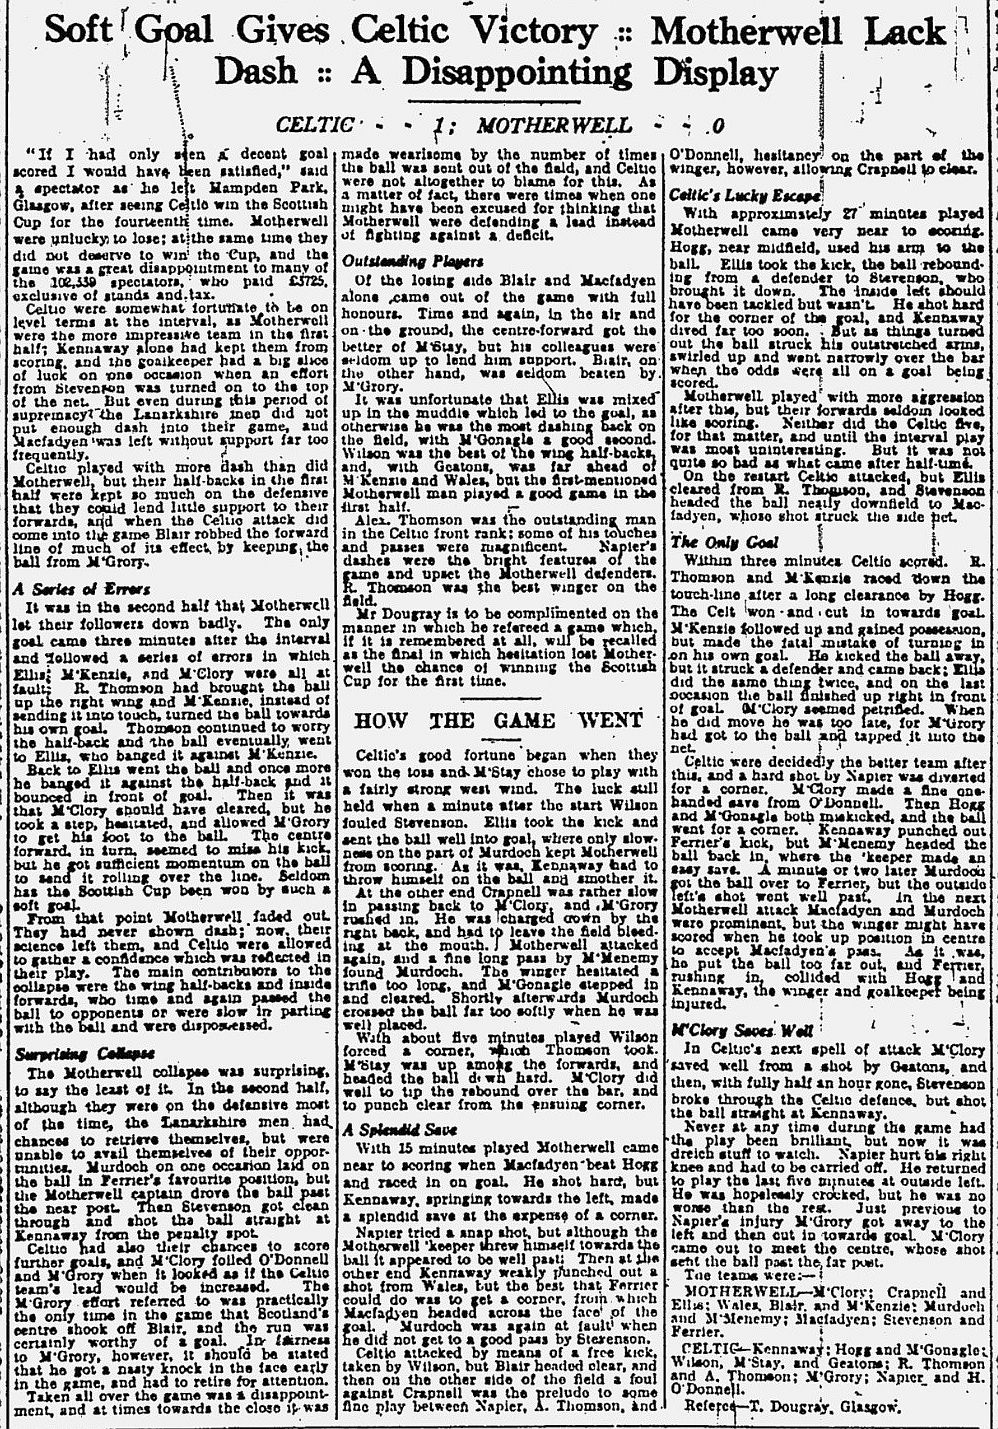 1933 Scottish Cup Final Newspaper Report